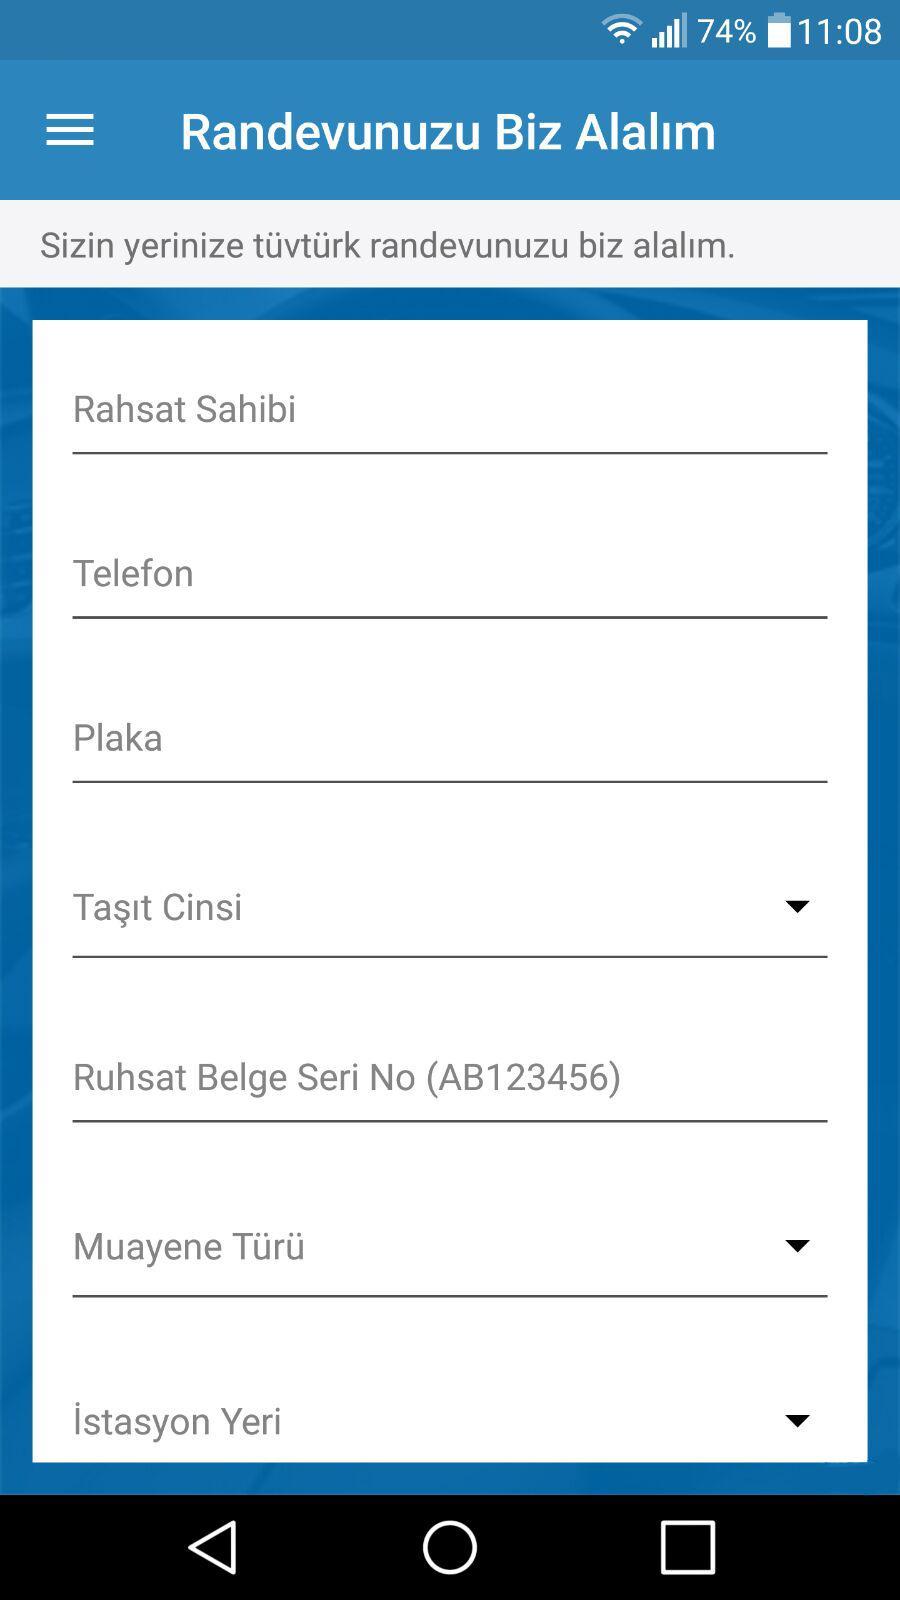 Tuvturk Ucretsiz Randevu For Android Apk Download